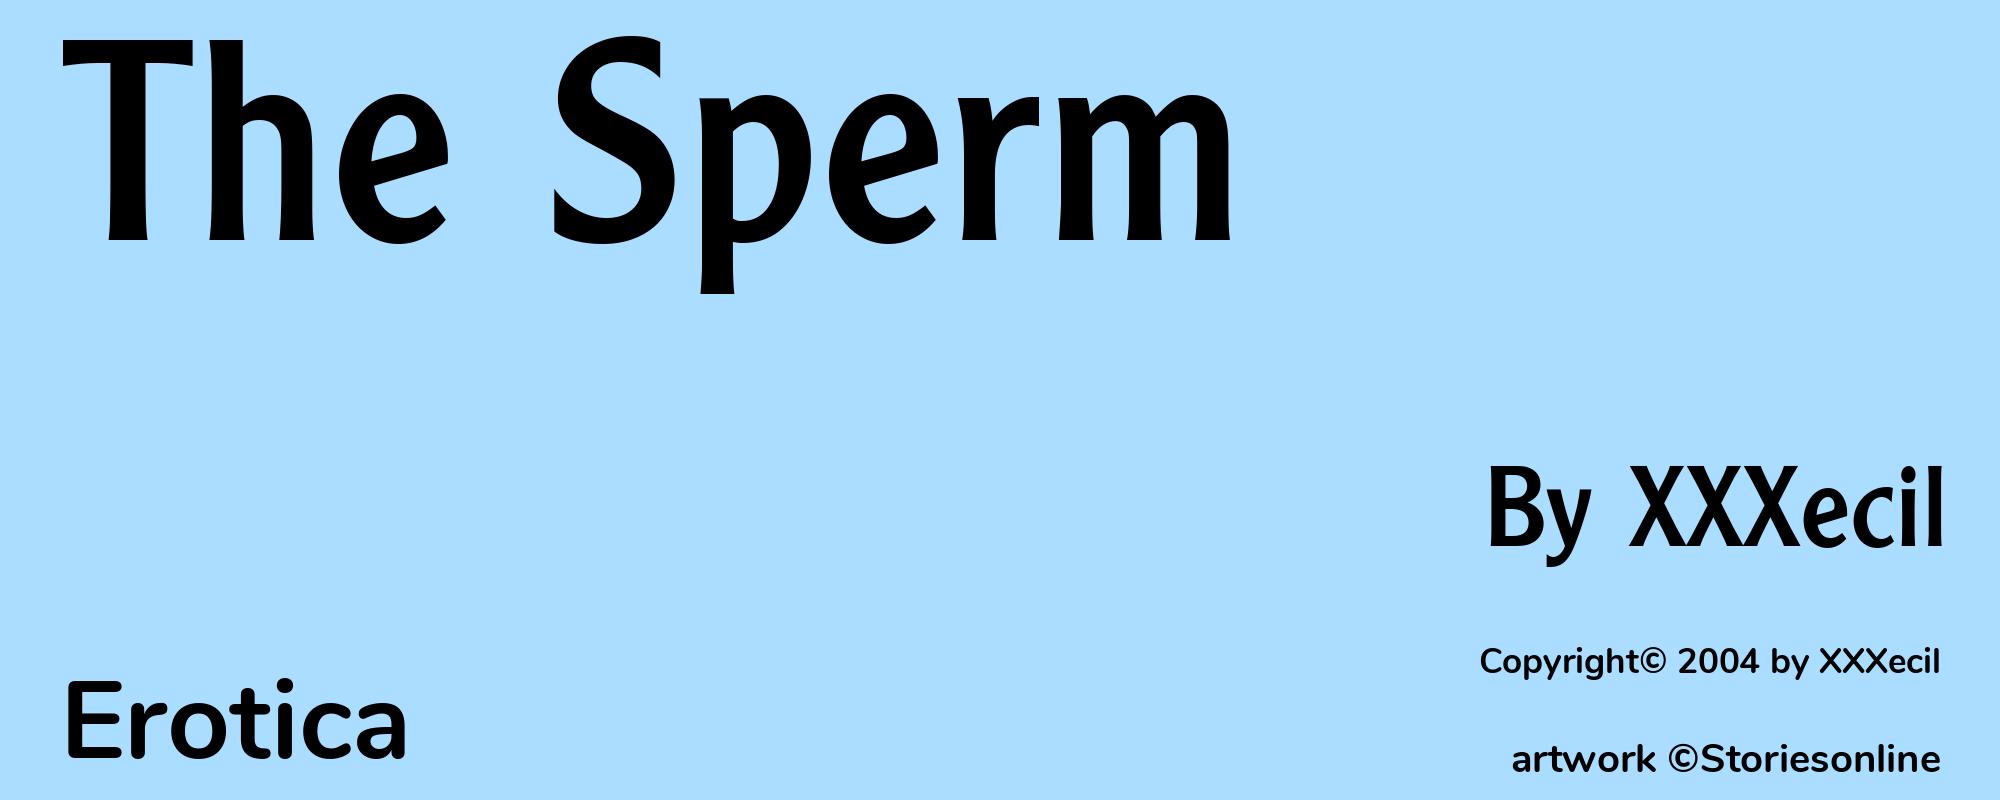 The Sperm - Cover